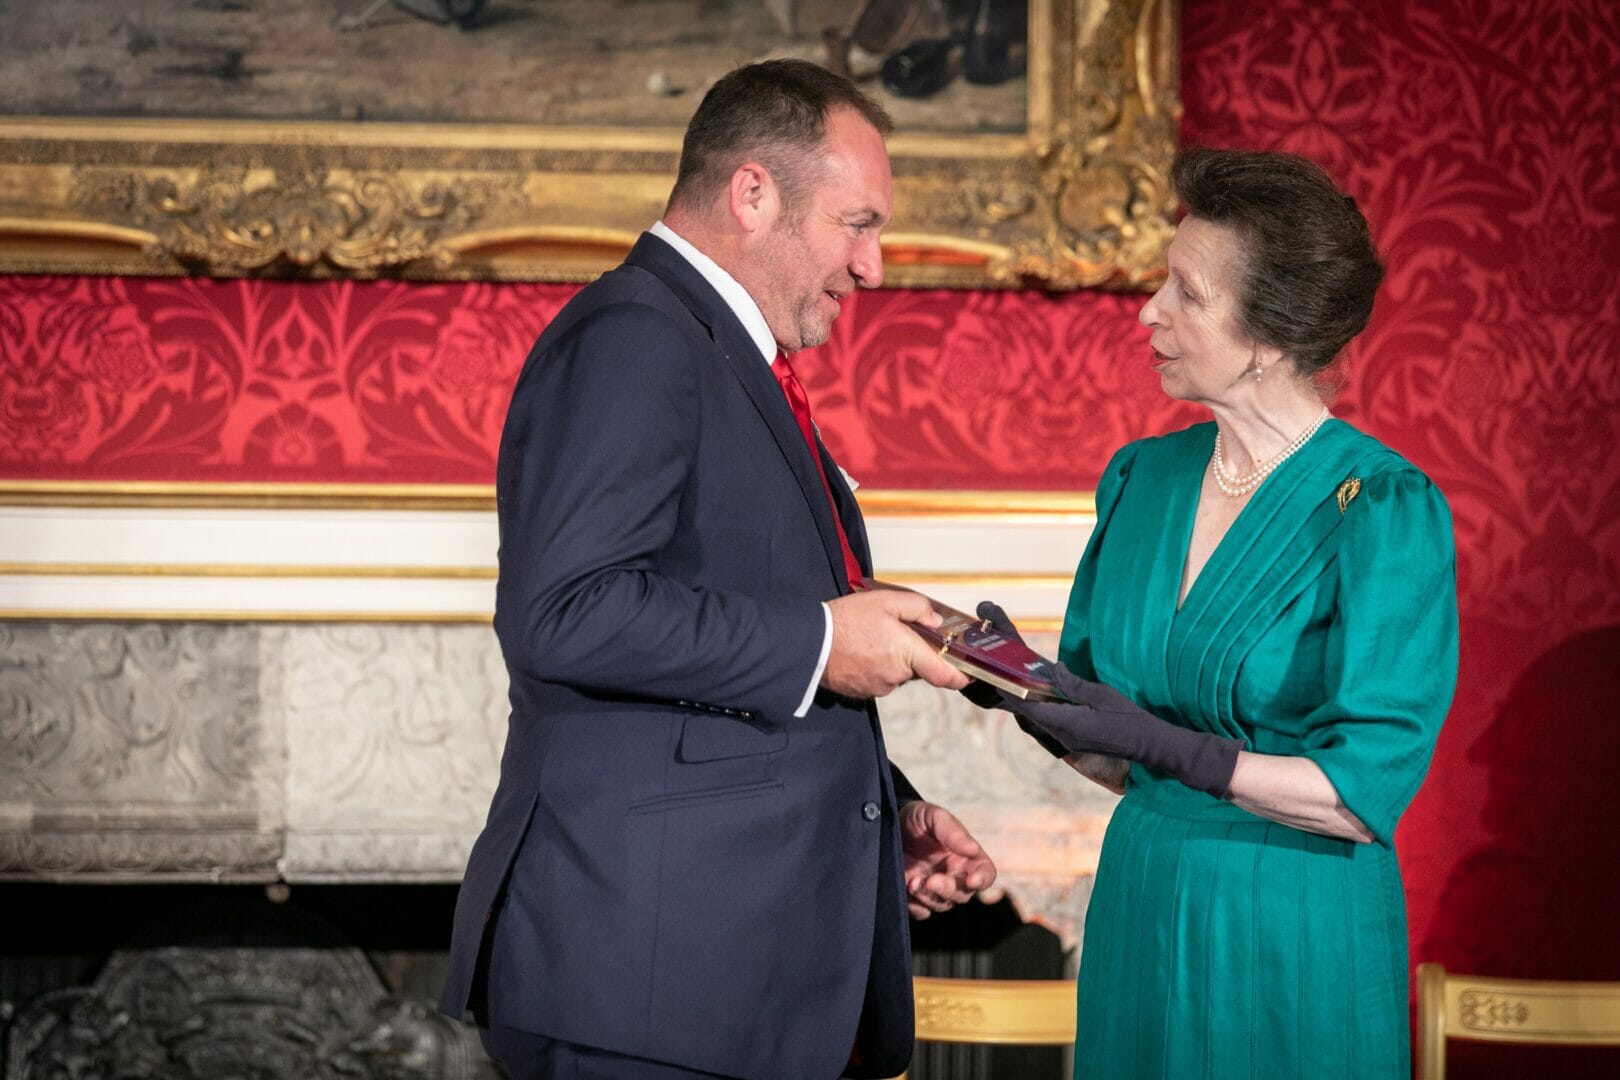 Leading Hospitality Business Presented Training Award By Princess Royal @MPWRestaurants